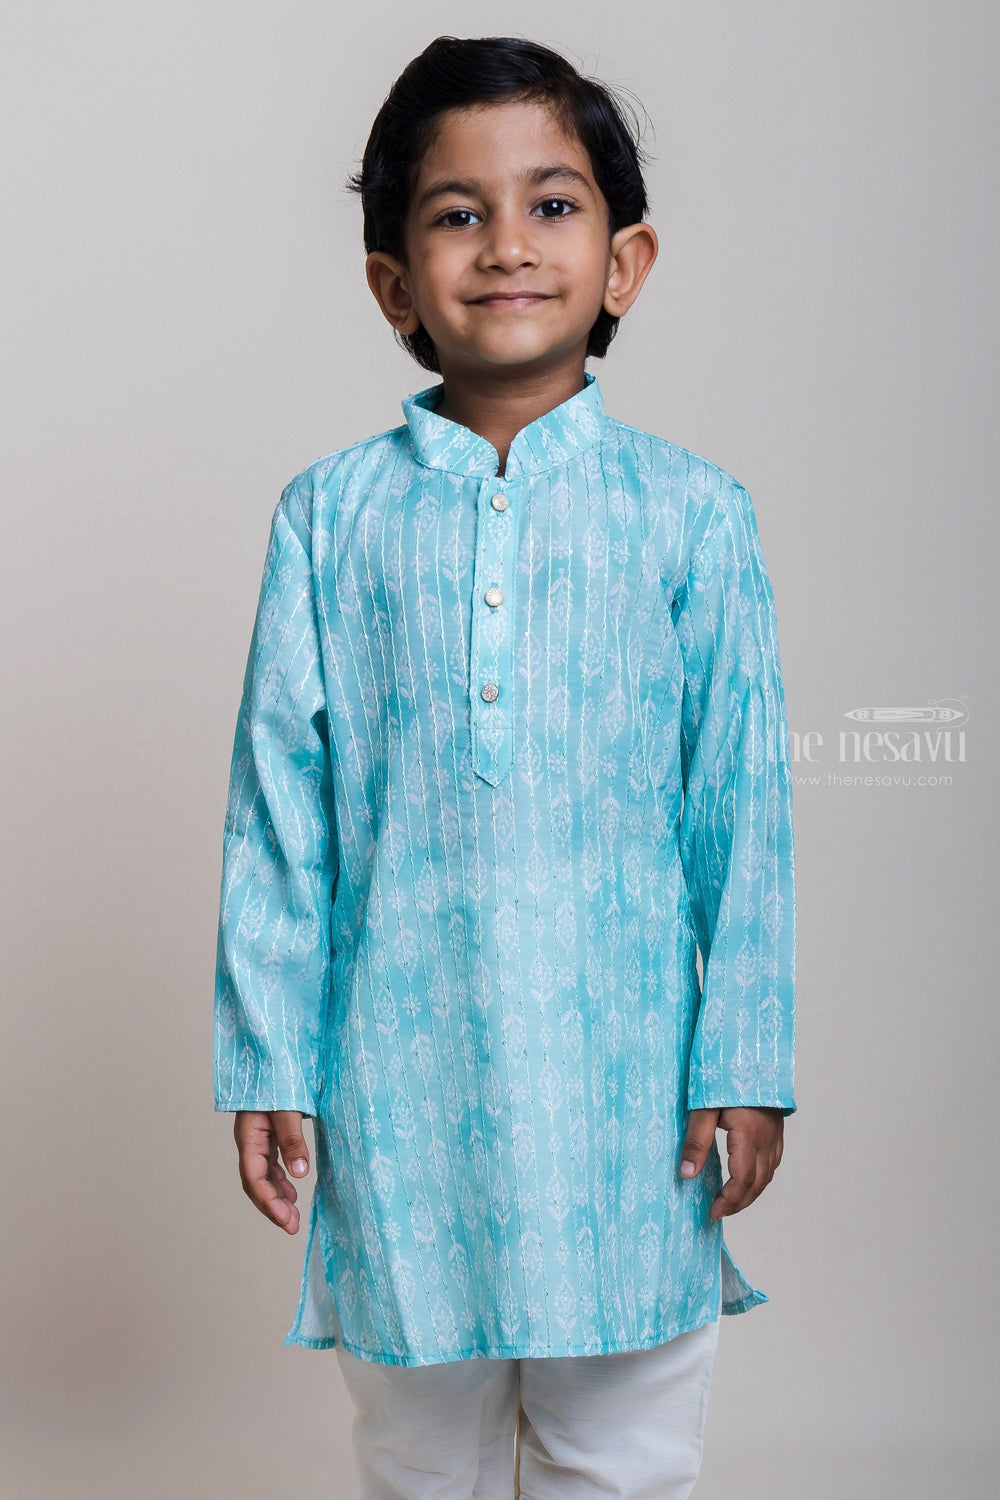 The Nesavu Boys Kurtha Set Sky Blue Designer Traditional Kurta Suit For Baby Boys With Cotton Pant Nesavu Top 5 Kurta Suit Designs For Baby Boys | Cotton Traditional Outfits | The Nesavu